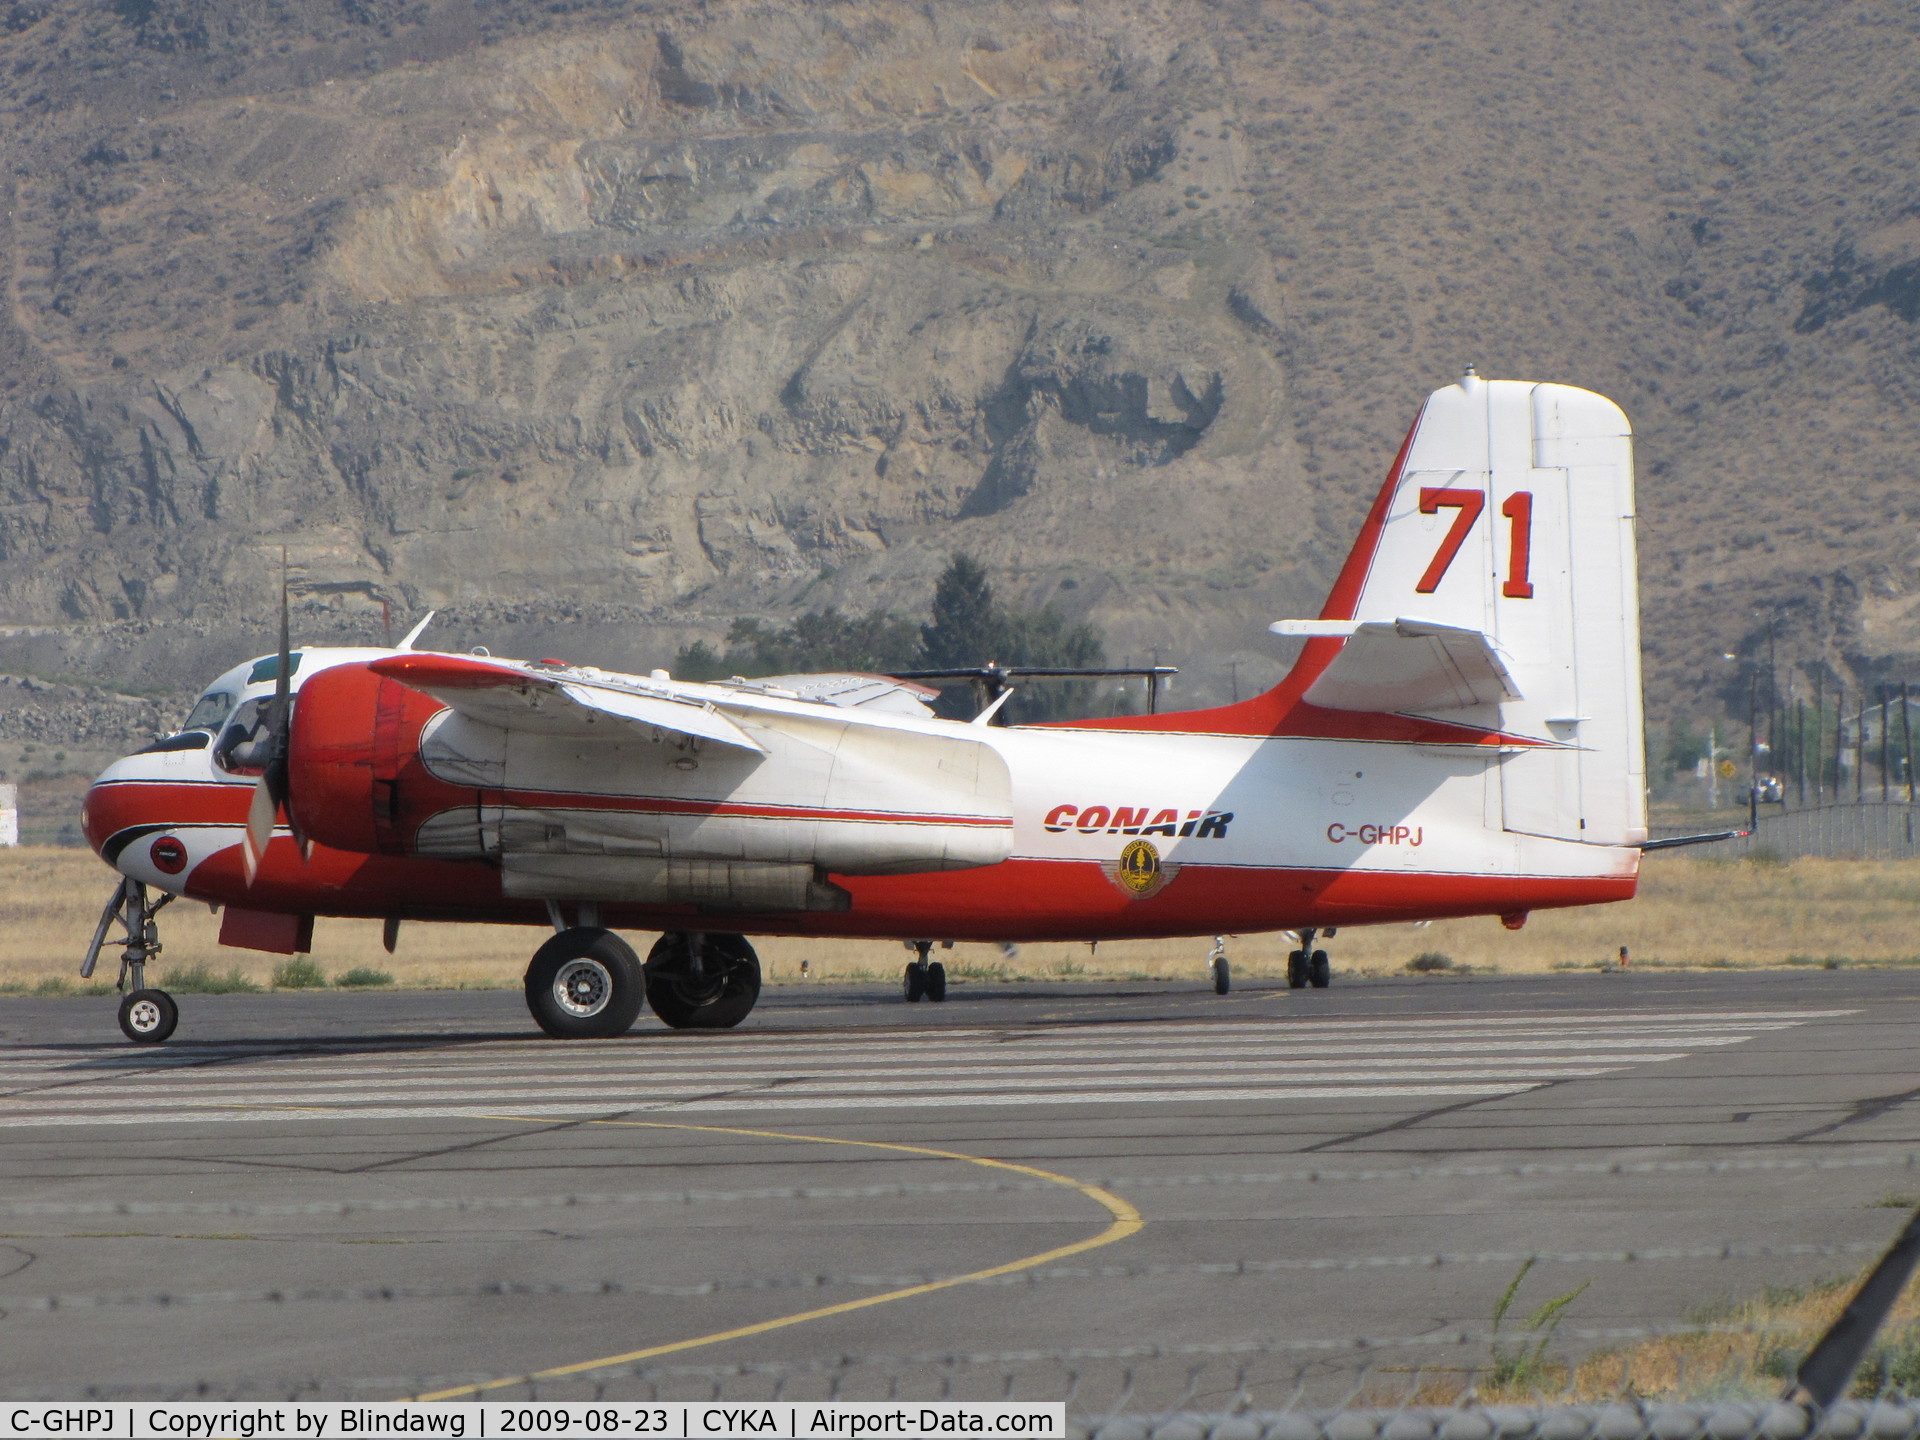 C-GHPJ, 1958 Grumman (Conair) S-2 Firecat (G-89) C/N 022 (136600 MSN 509), ...waiting to go on 26.